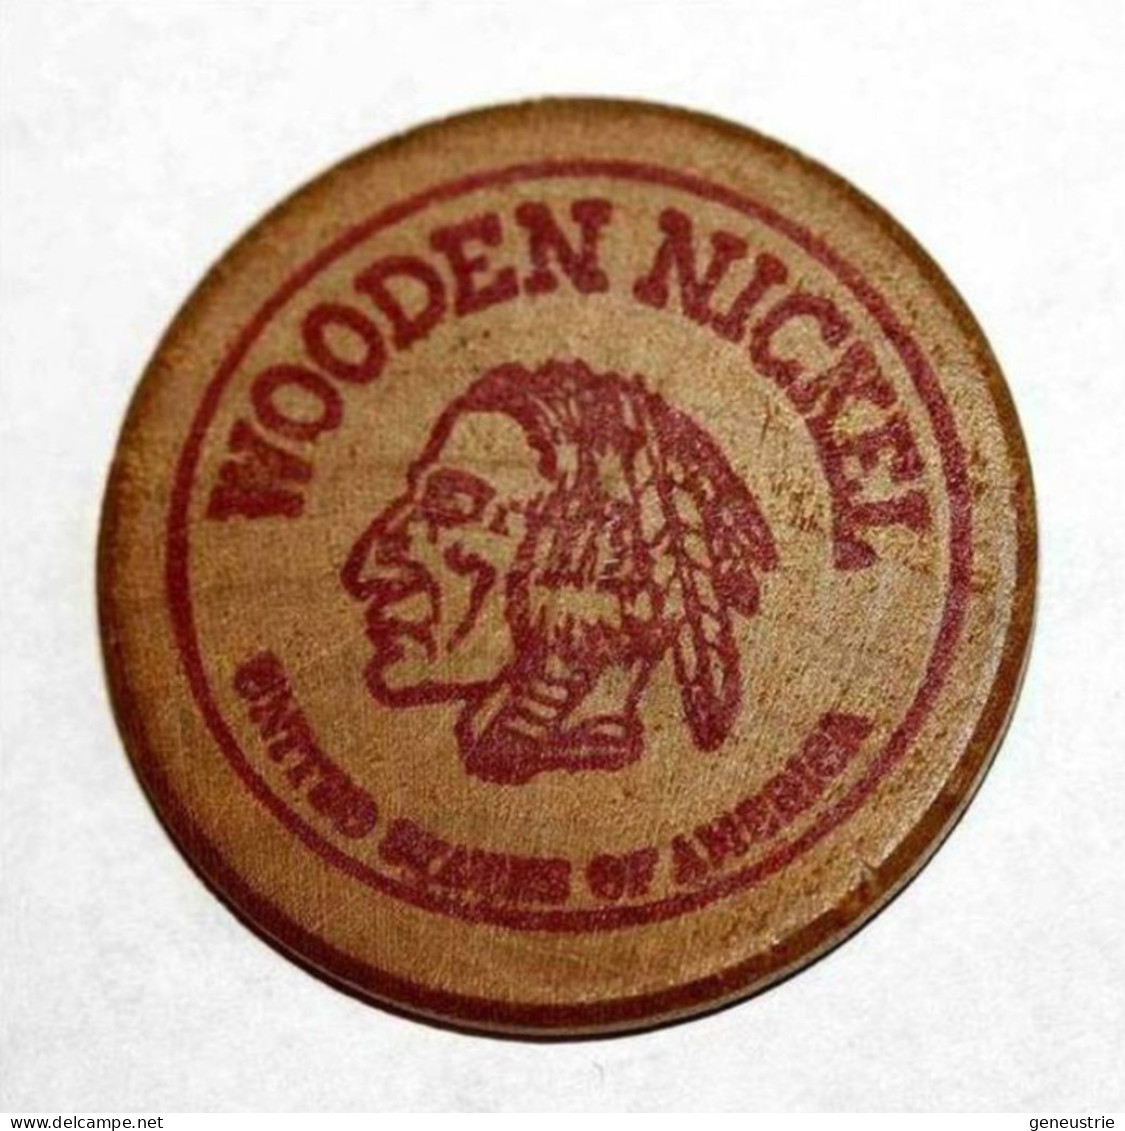 Wooden Token 1$ - Wooden Nickel - Jeton Bois Monnaie Nécessité - Tête D'Indien - One Dollar - Etats-Unis - Monetary/Of Necessity